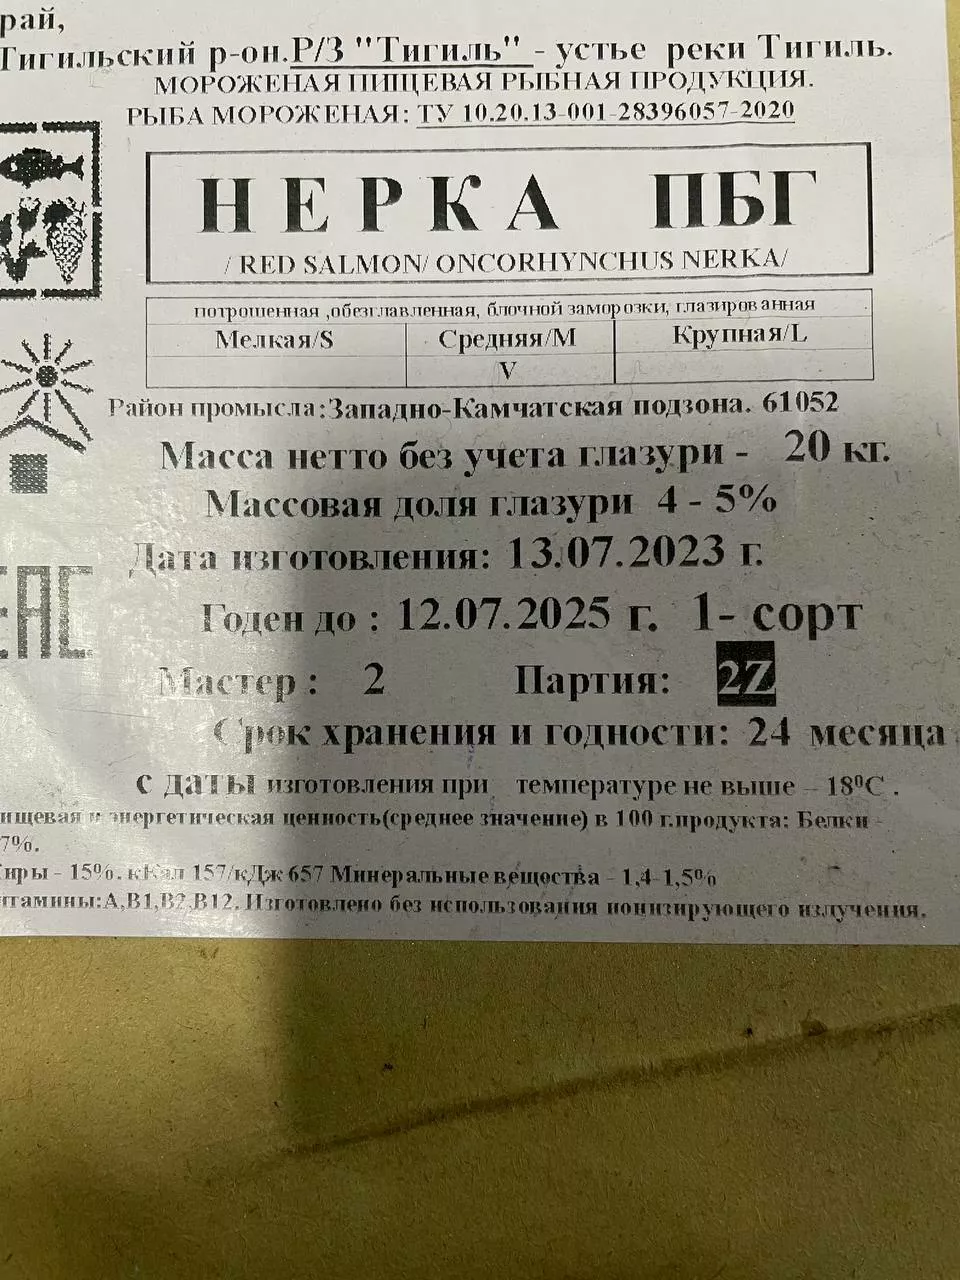 нерка пбг 1 сорт 1.6 - 2 кг мешок 1/20 в Санкт-Петербурге 2